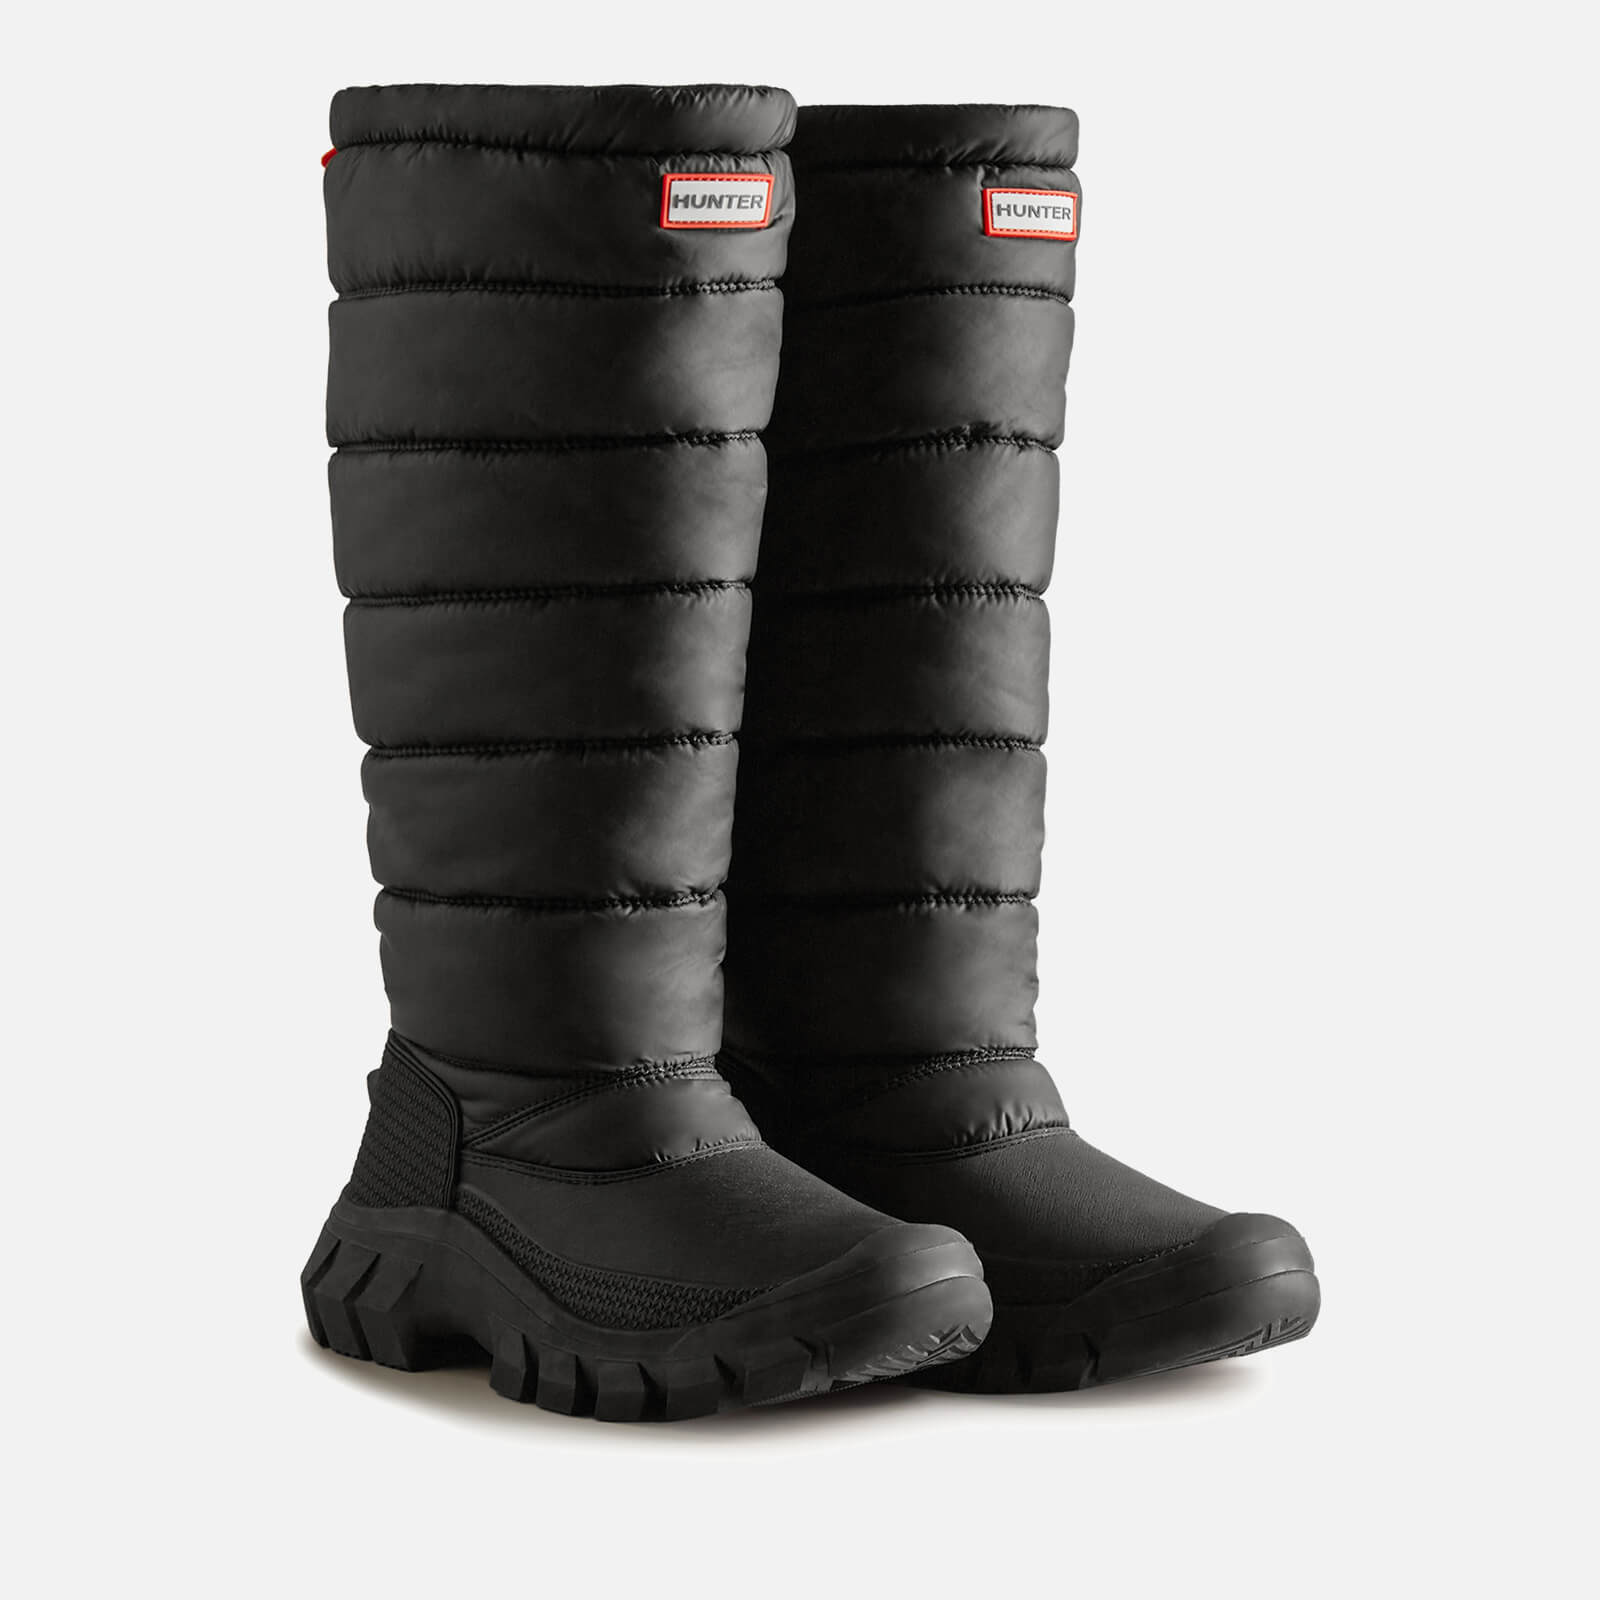 Hunter Women's Intrepid Tall Snow Boots - Black - UK 3